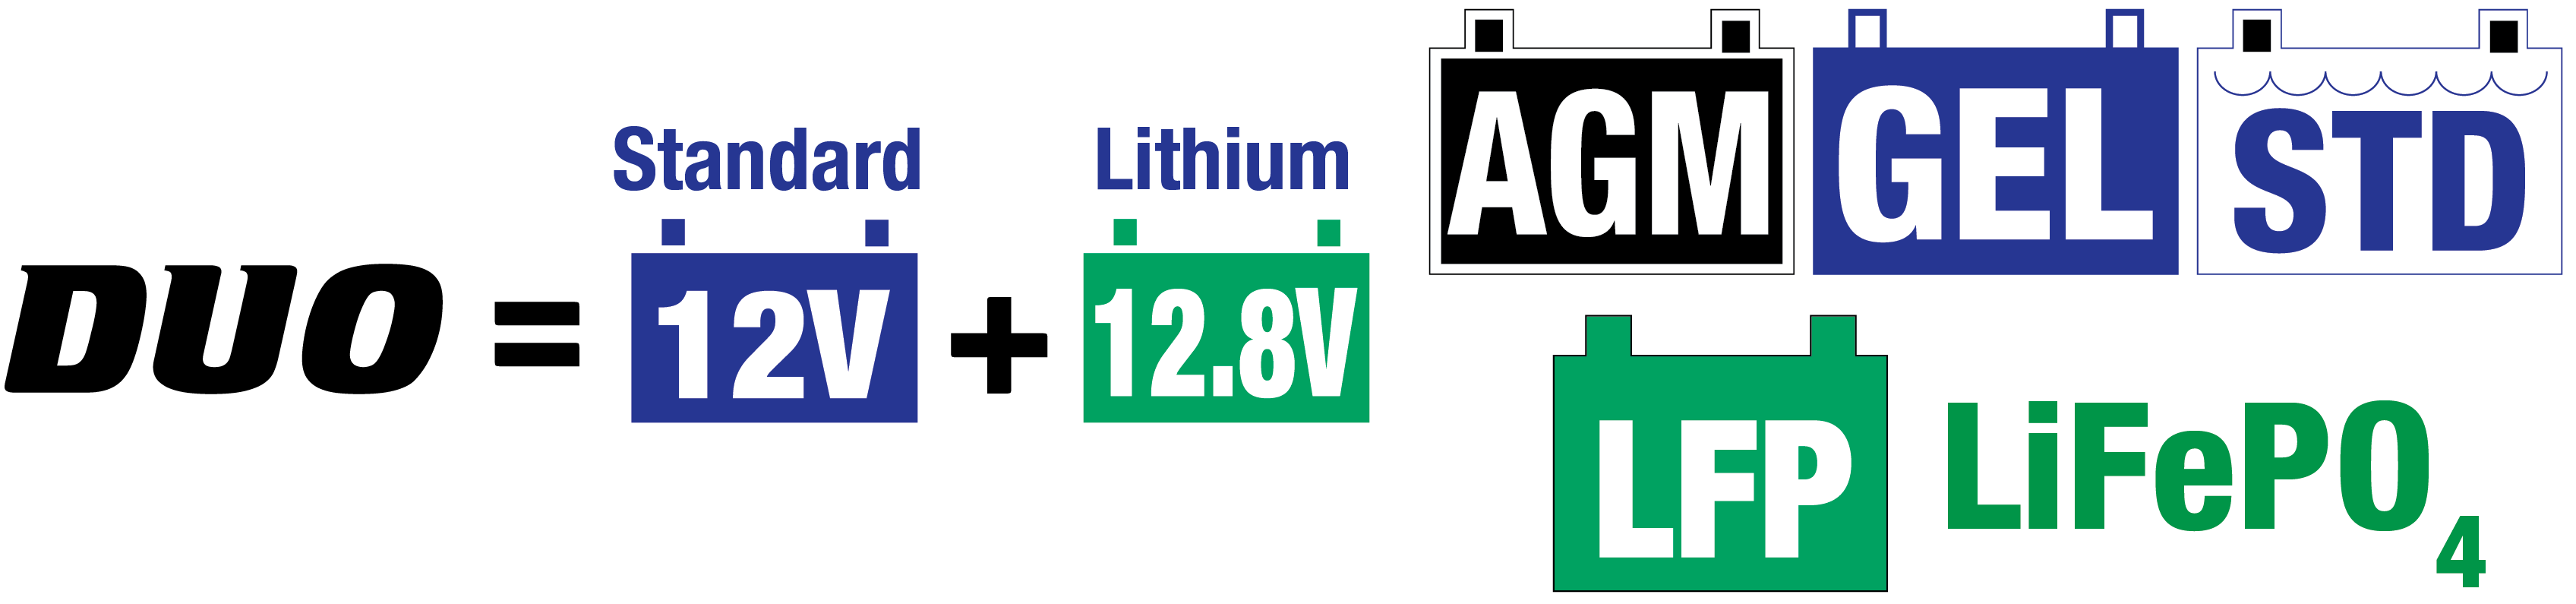 el cargador solar de 12v es ideal para baterías de plomo de 12V / 12,8V de litio